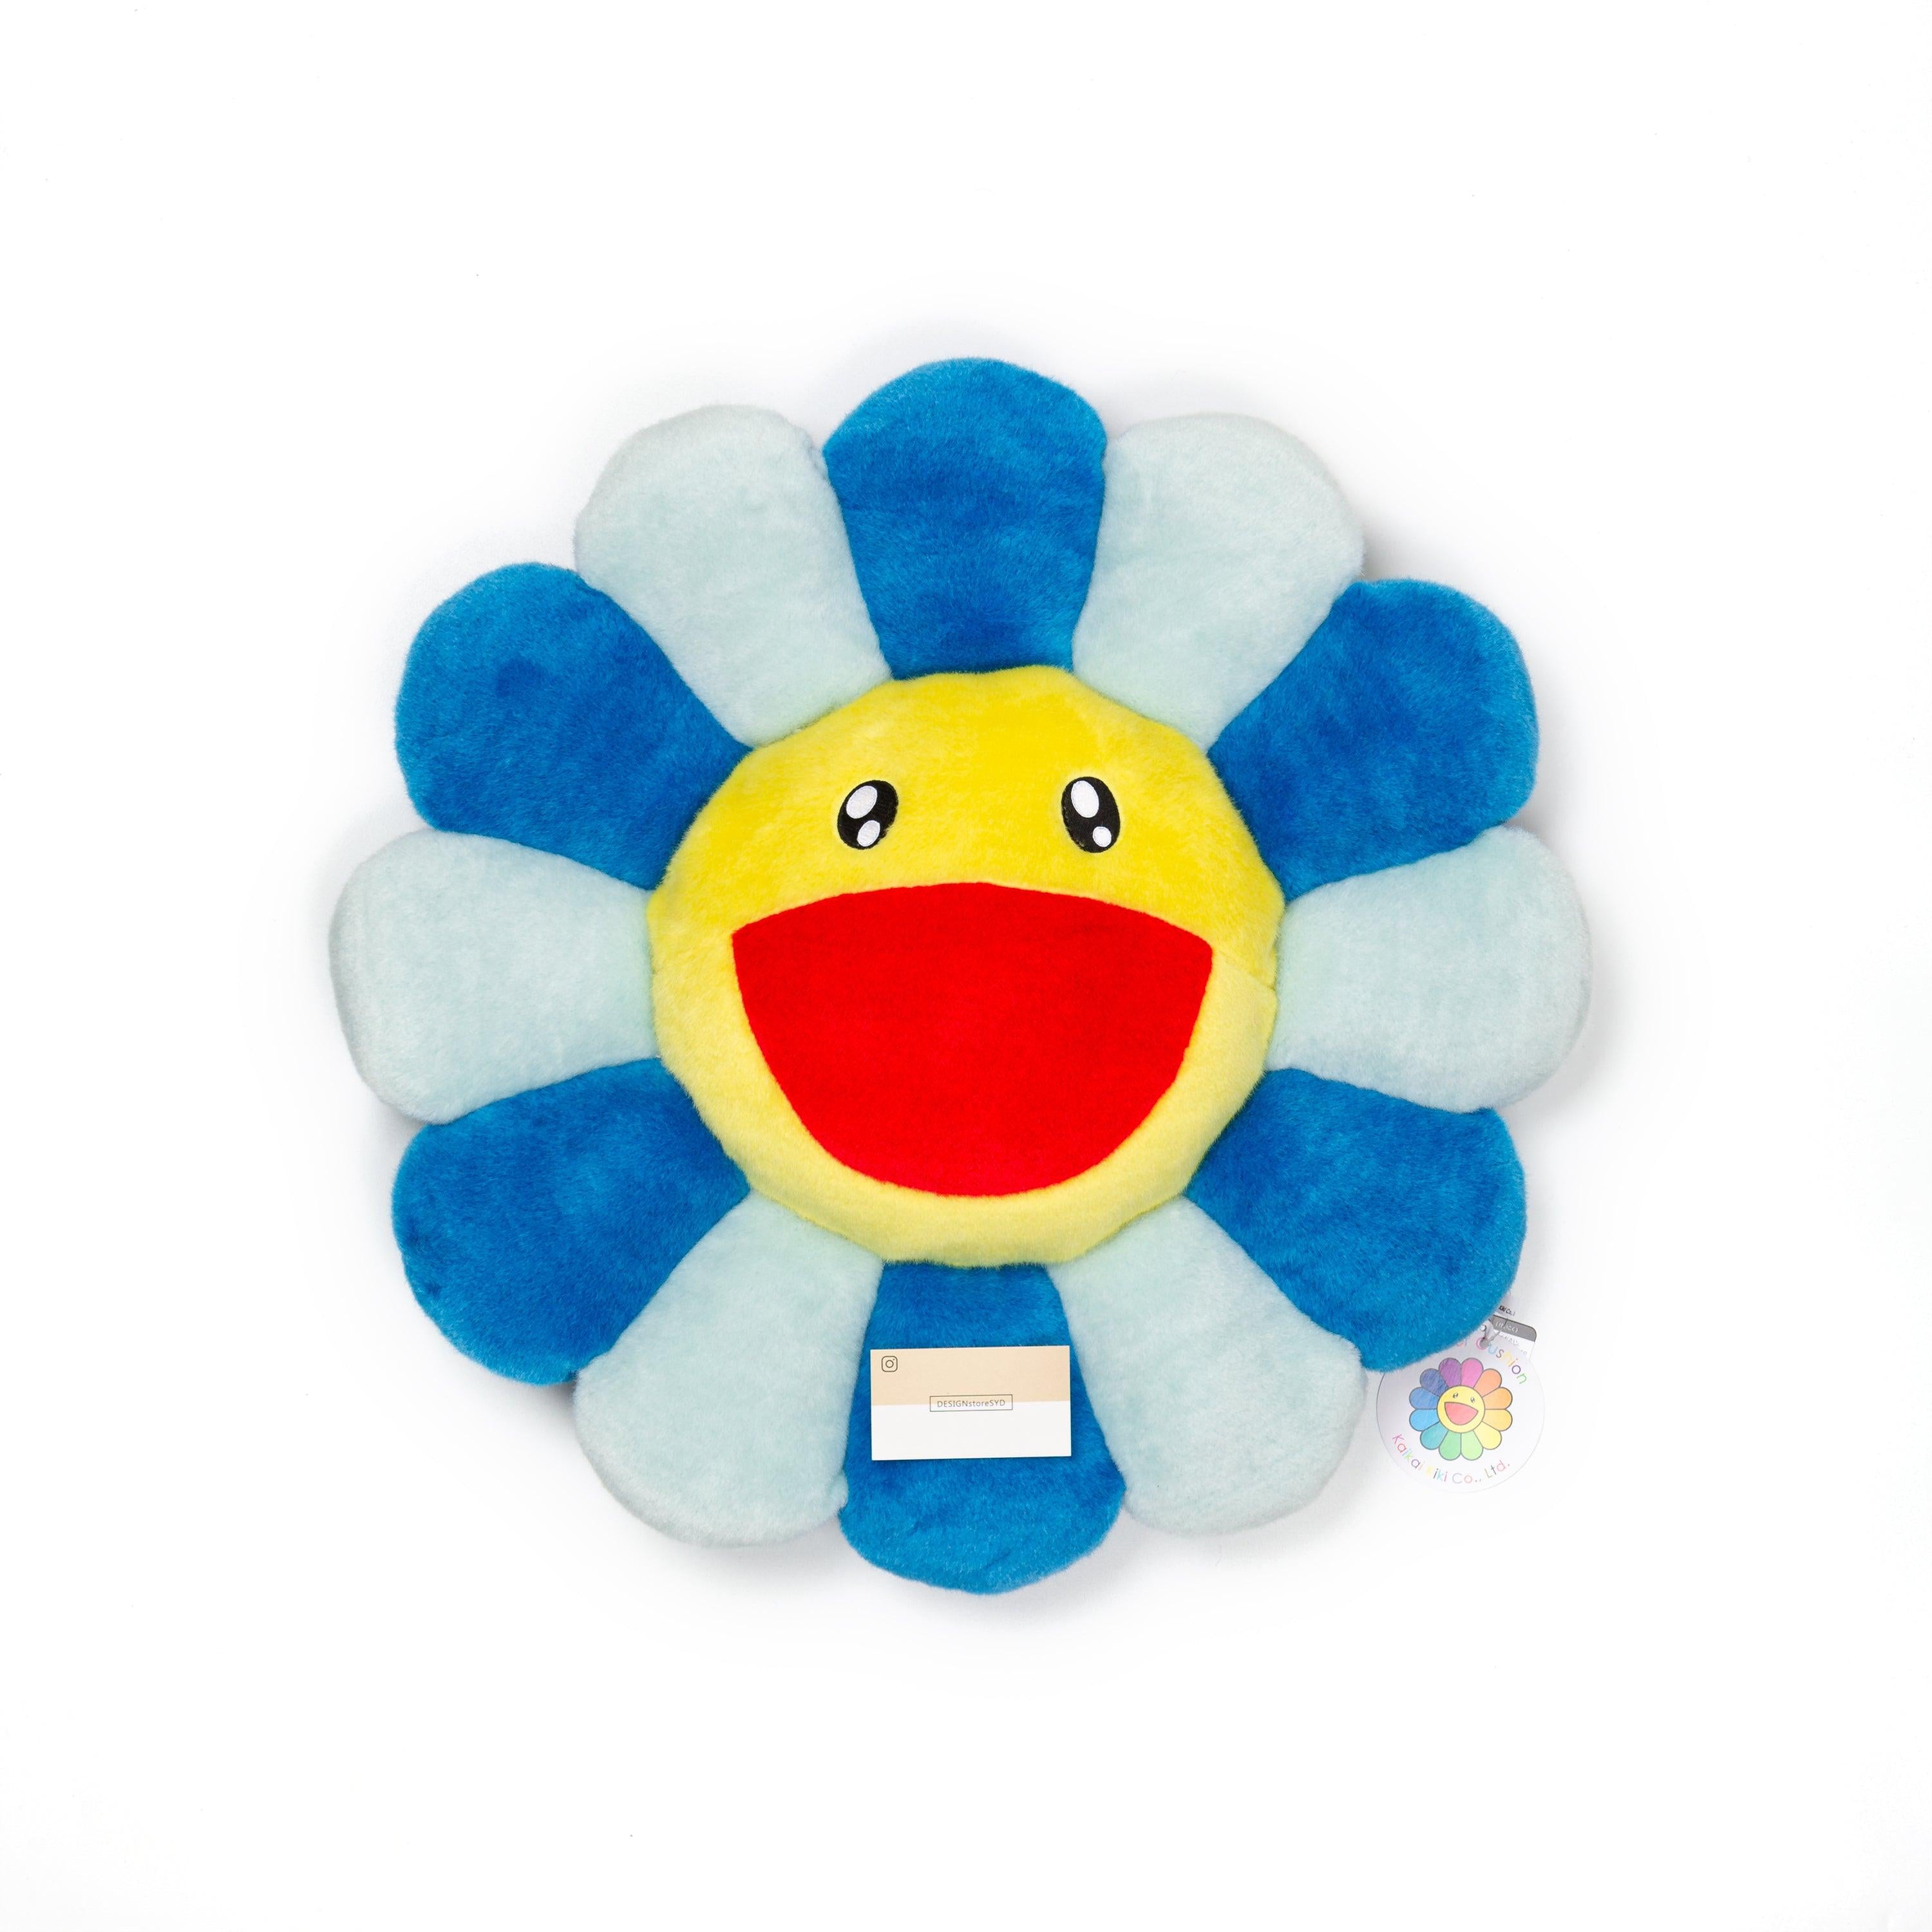 Takashi Murakami, Flower Plush Light Blue (2021), Available for Sale